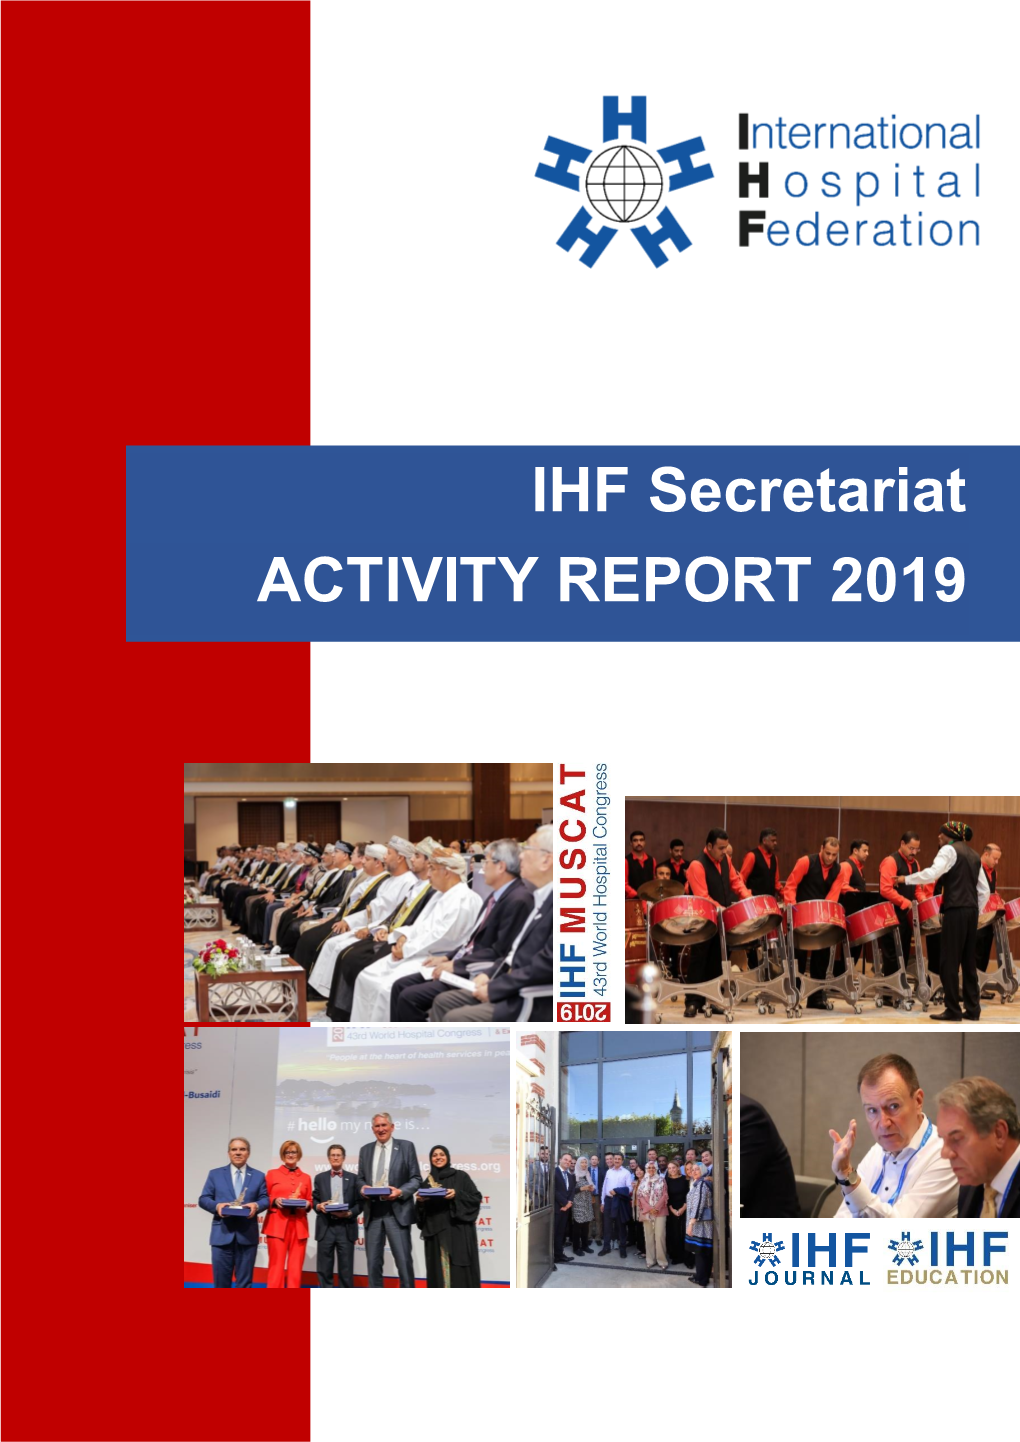 IHF Secretariat ACTIVITY REPORT 2019